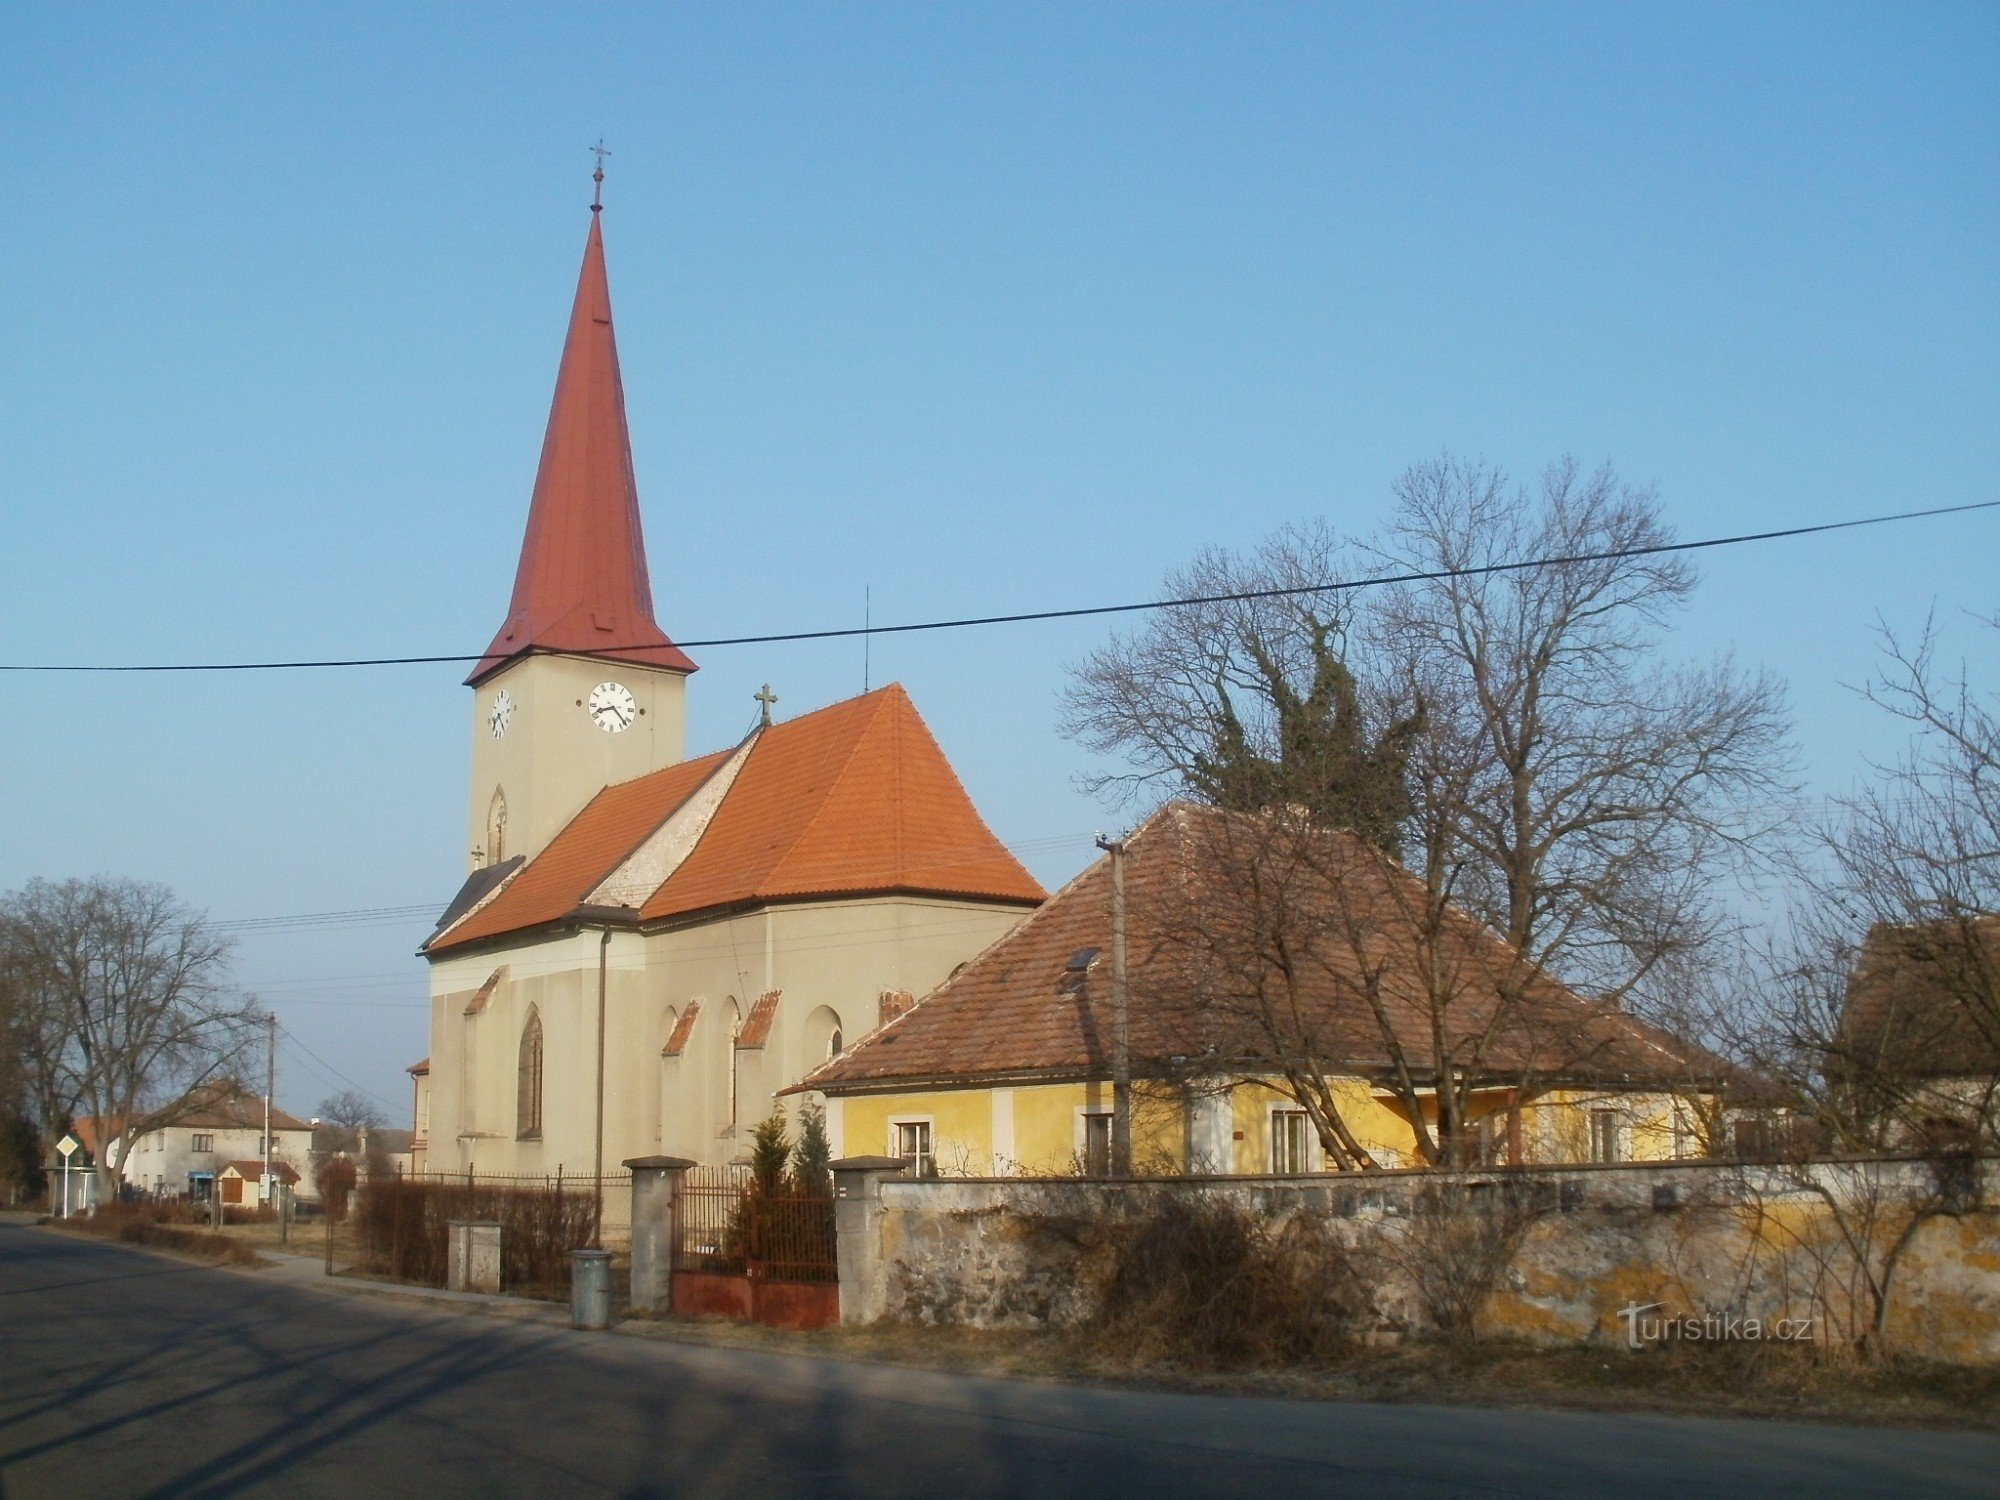 Kunětice - Kirche St. Bartholomäus